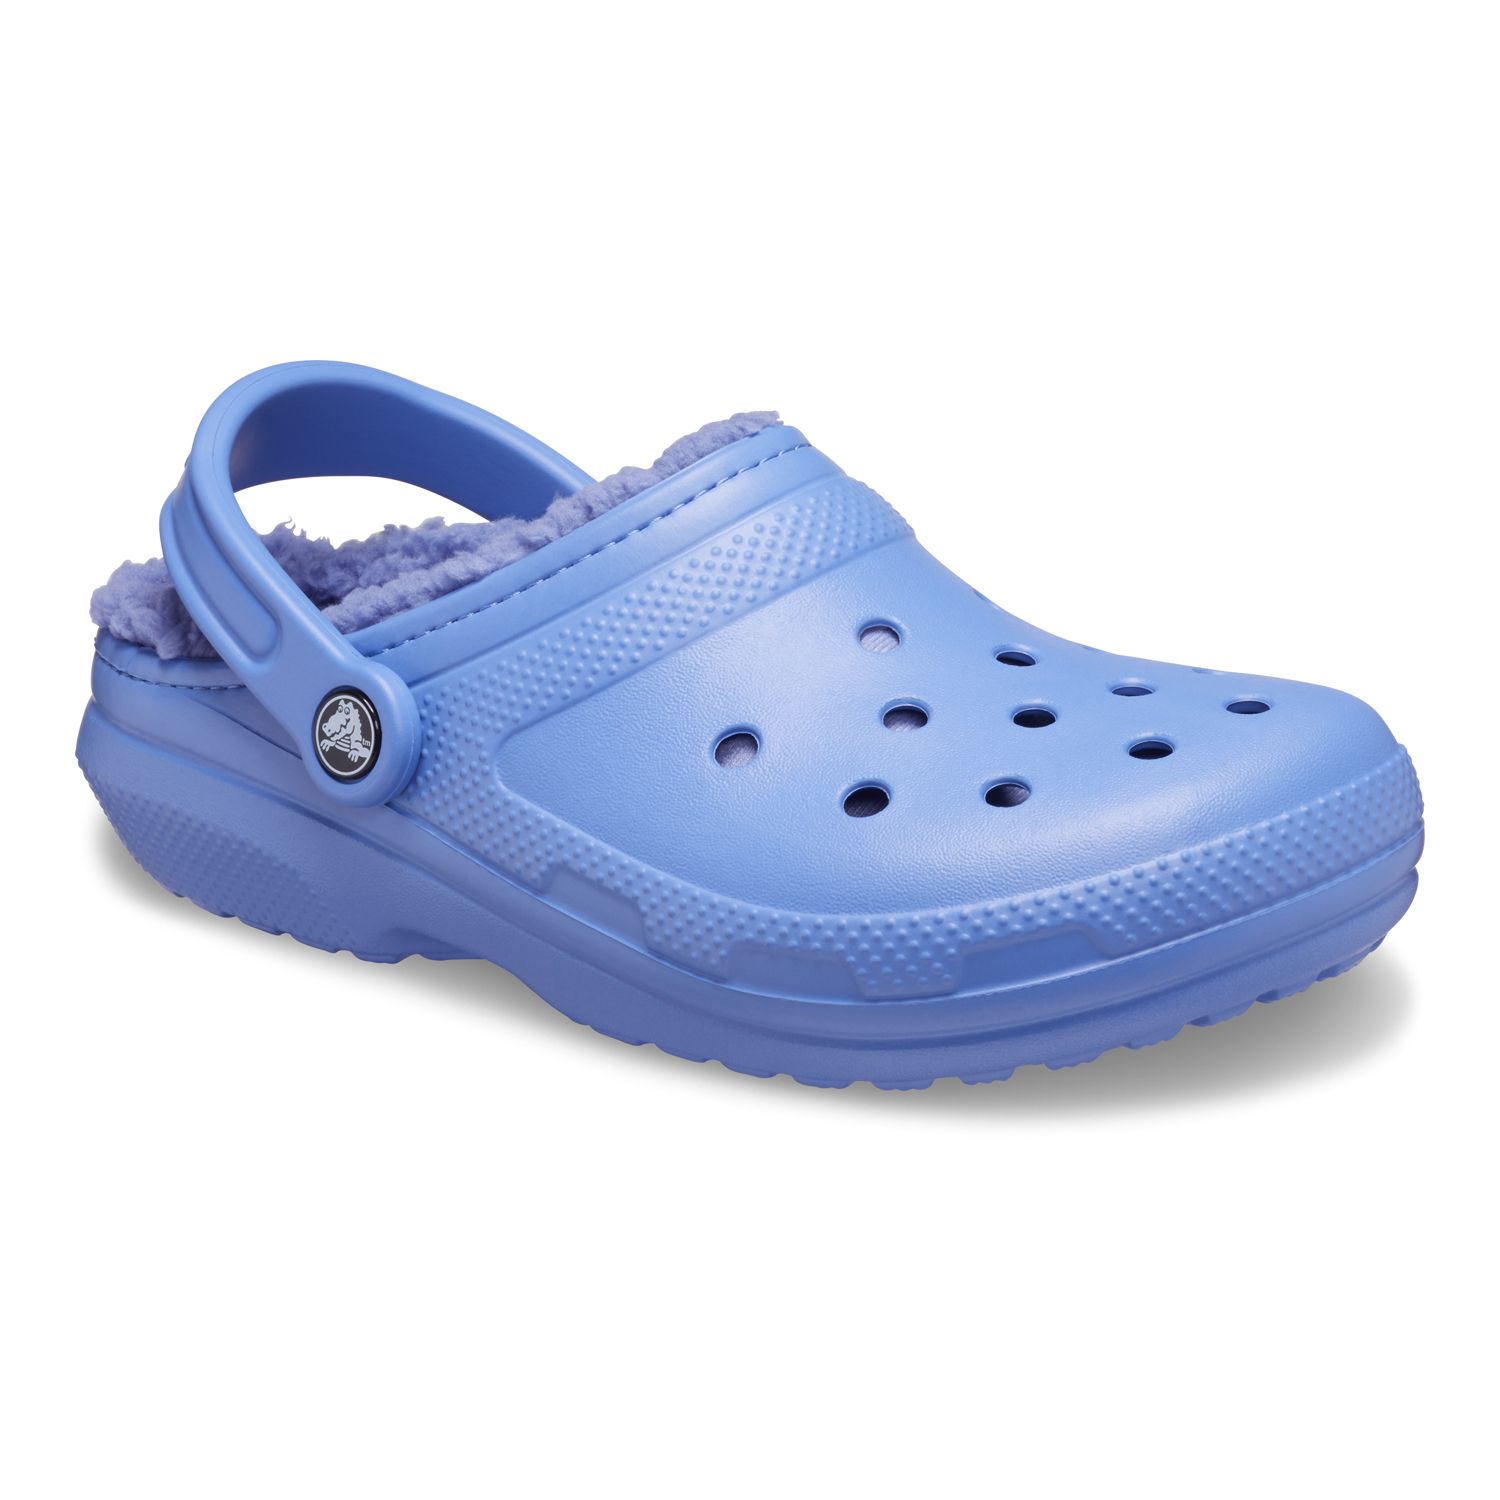 blue fuzzy crocs